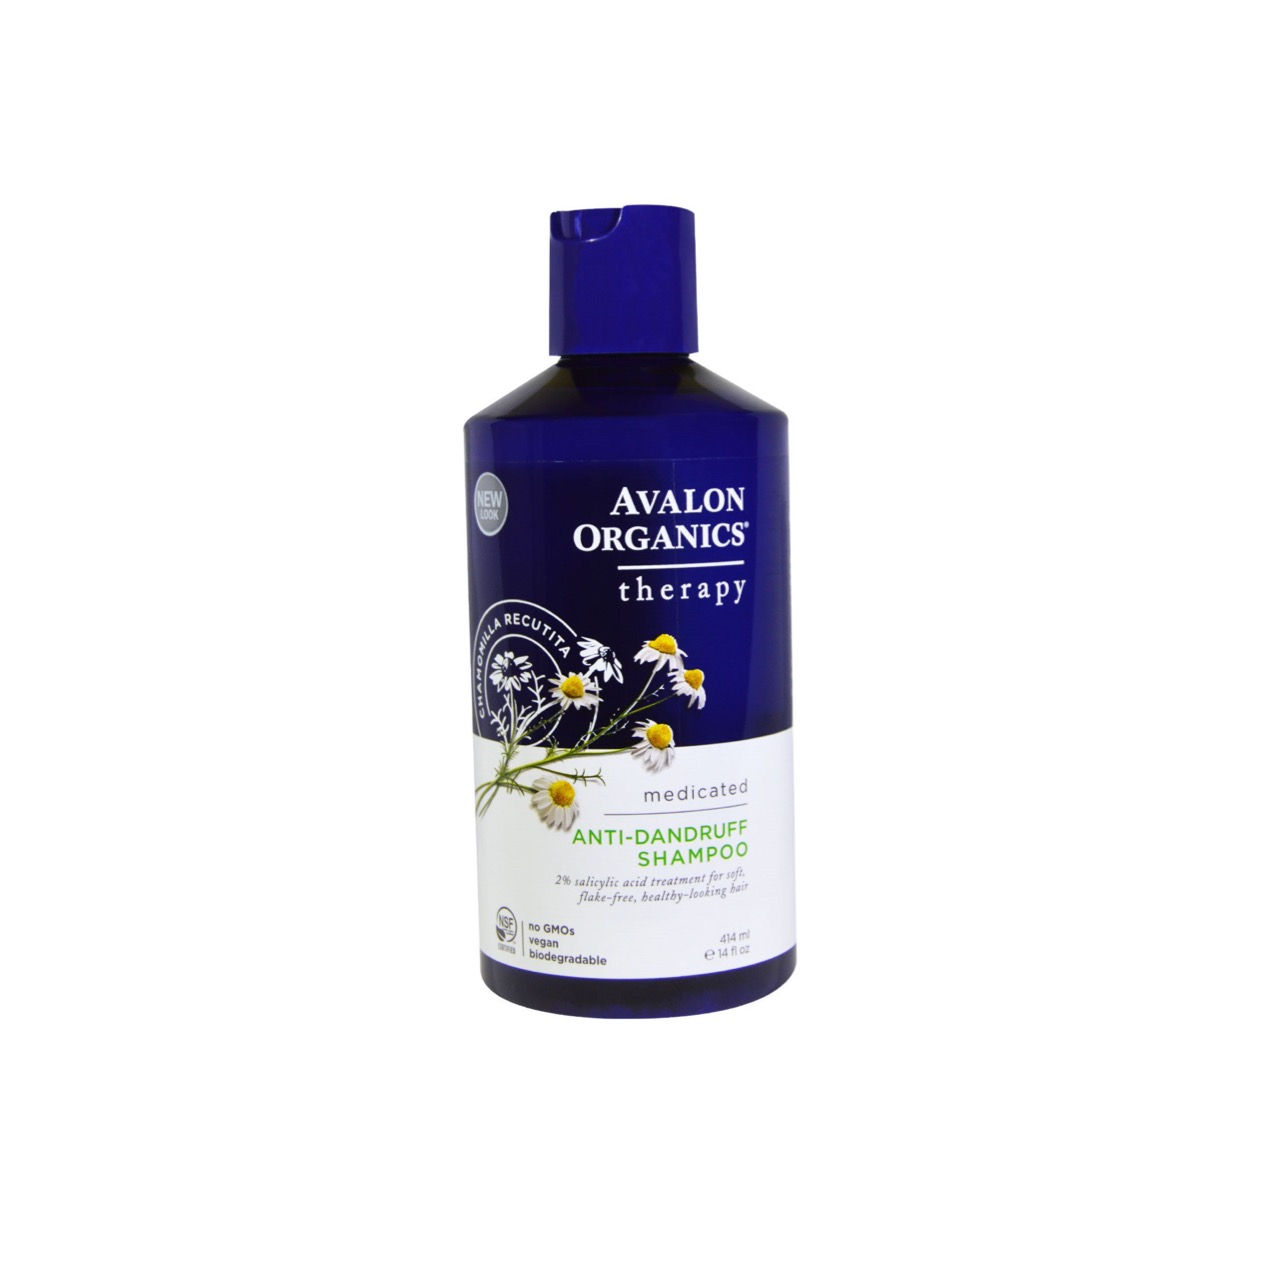 Avalon Organics Anti Dandruff Shampoo